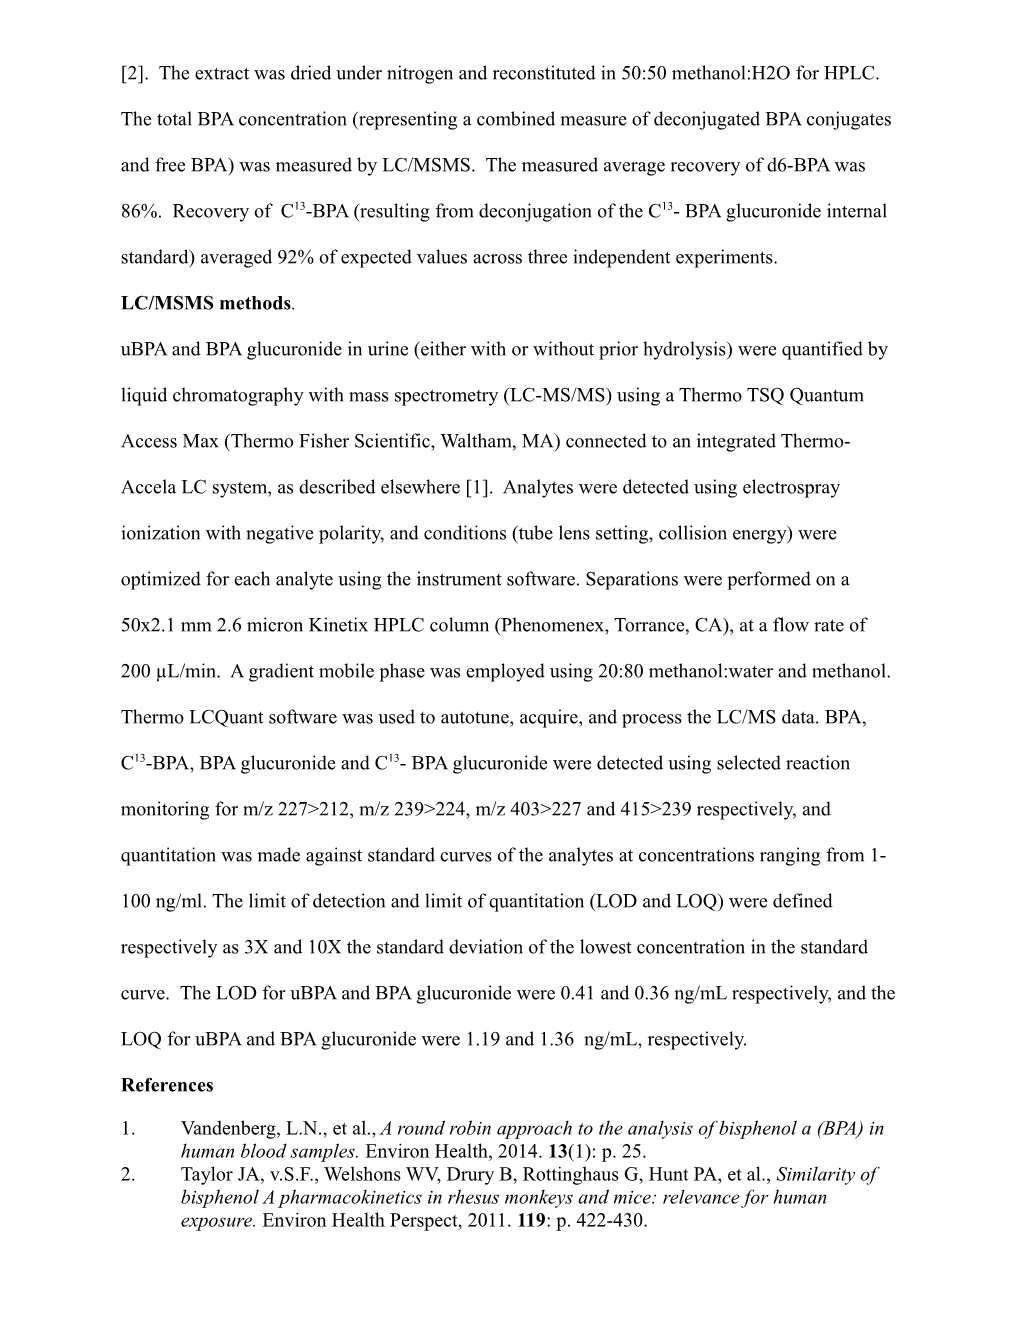 University of Missouri Laboratory Confirmation of BPA Glucuronide: Laboratory Methods